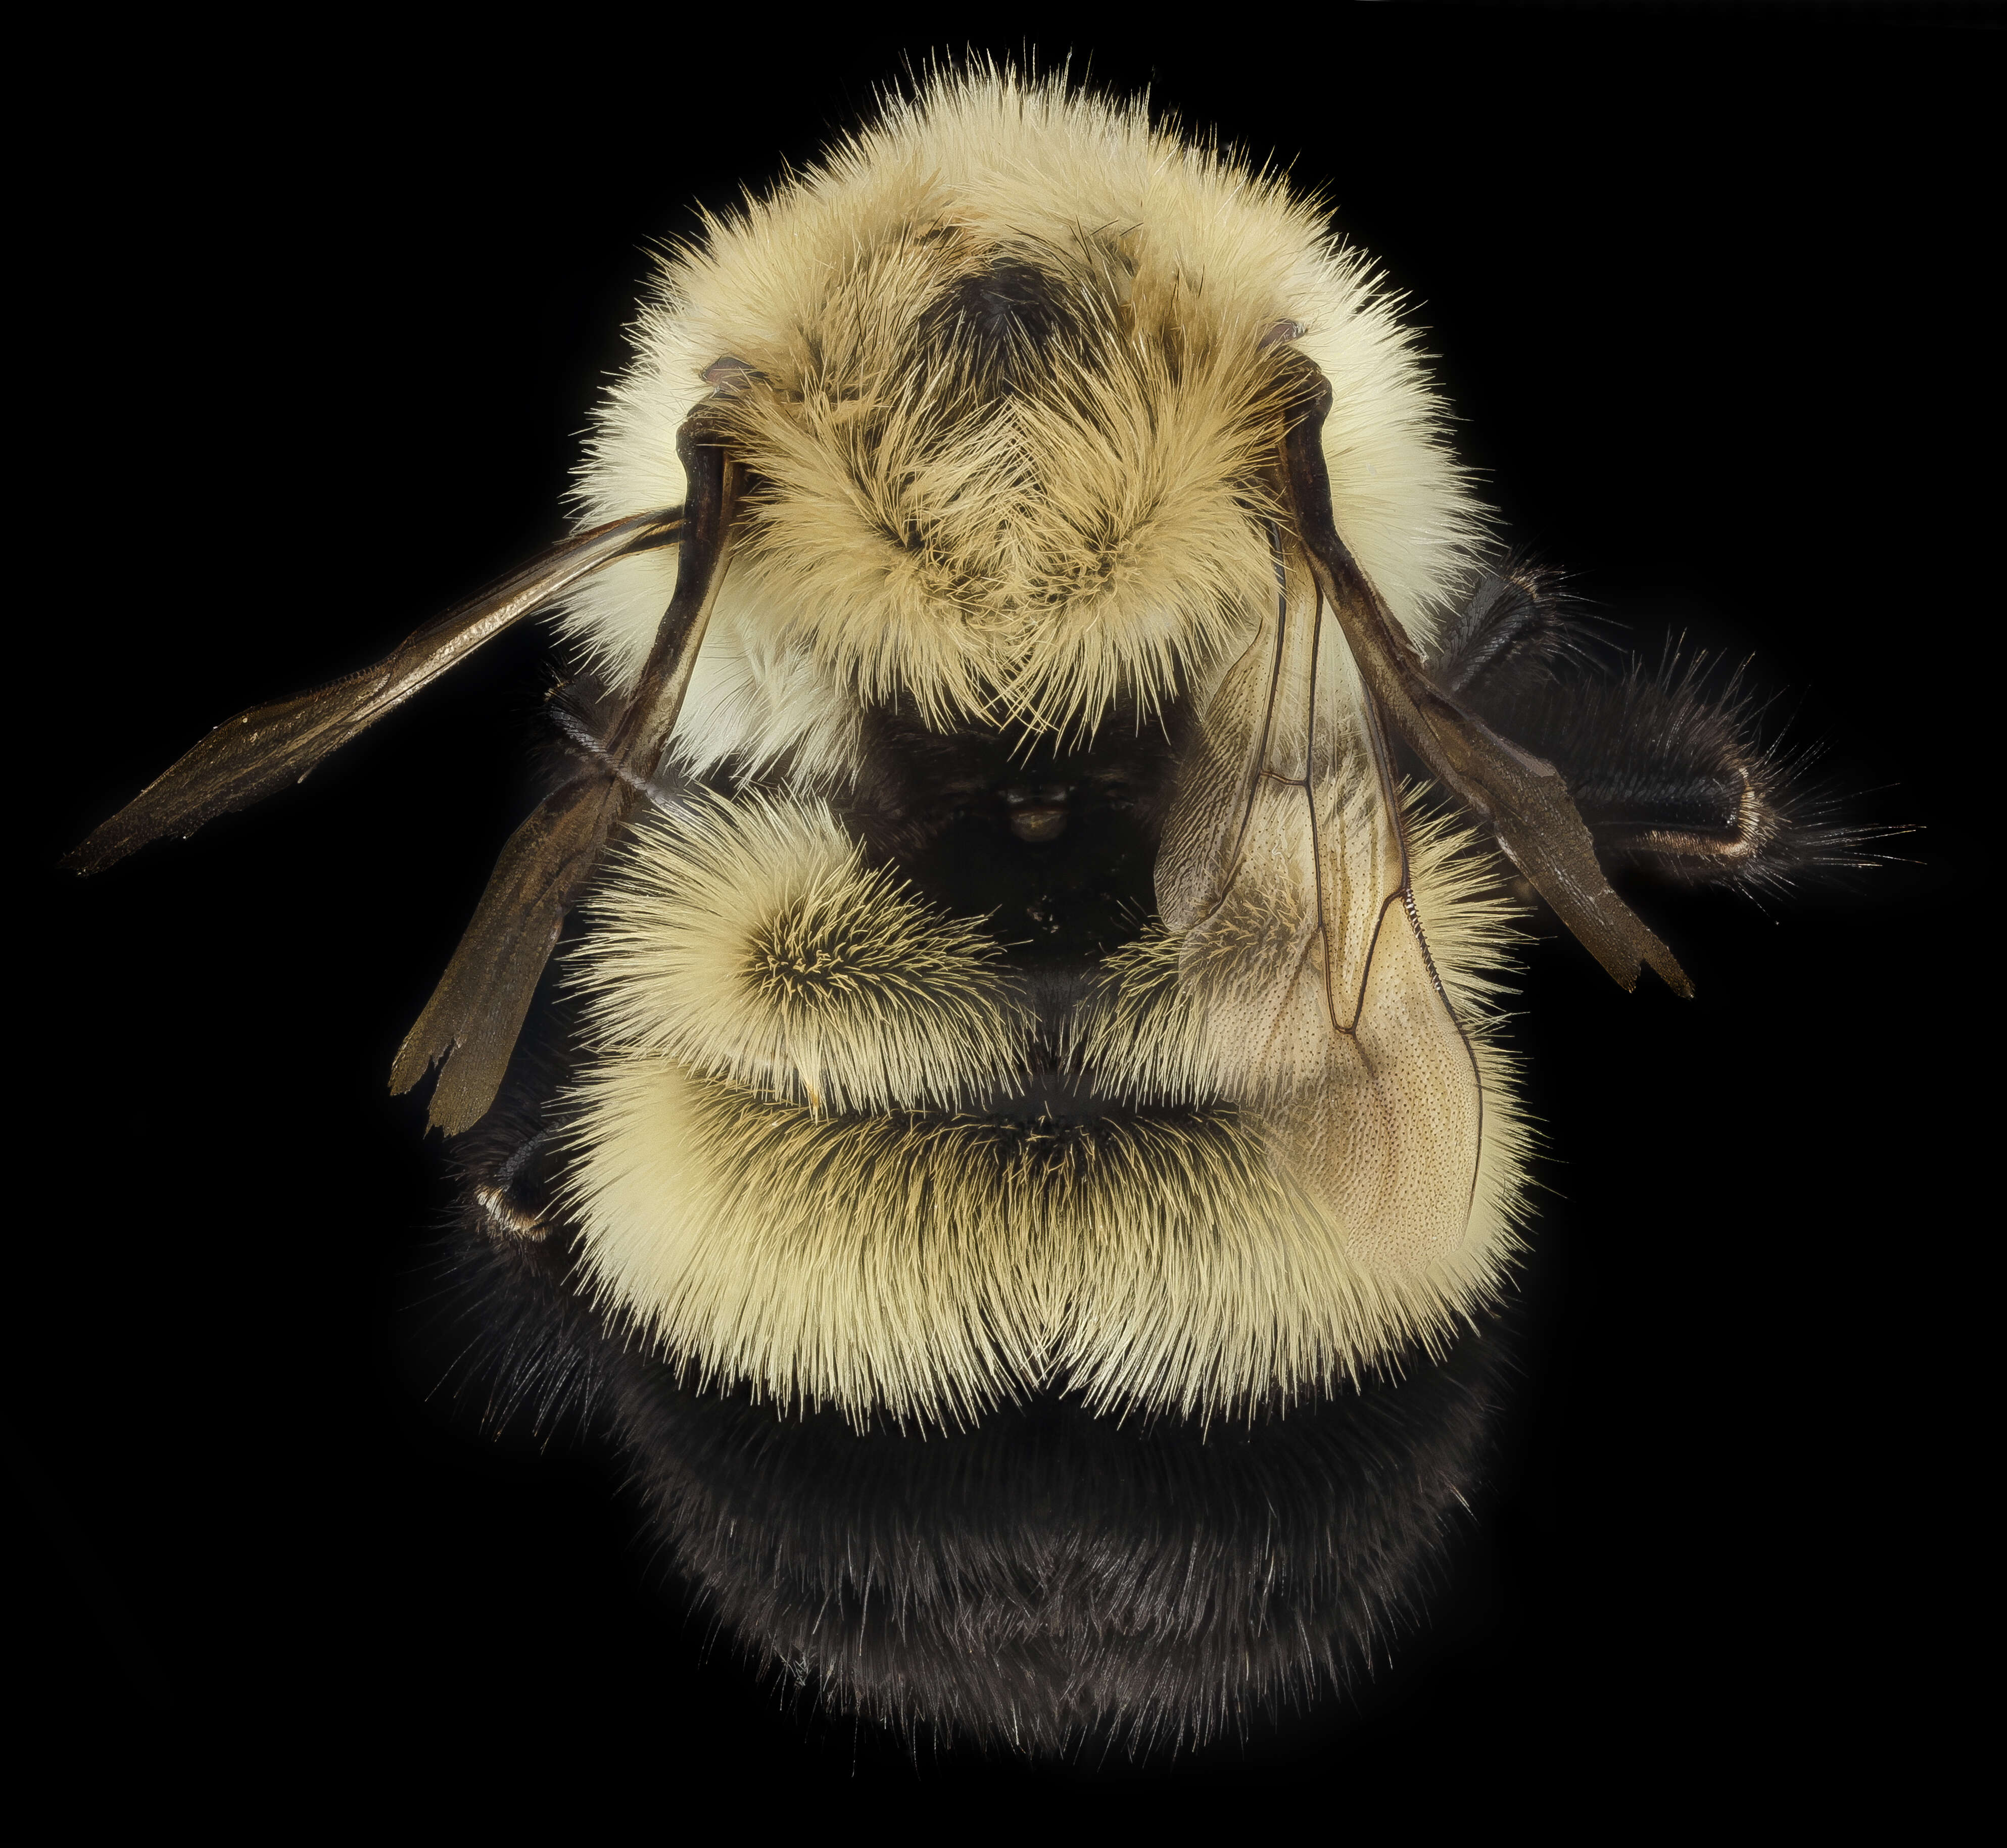 Image of Half-black Bumblebee